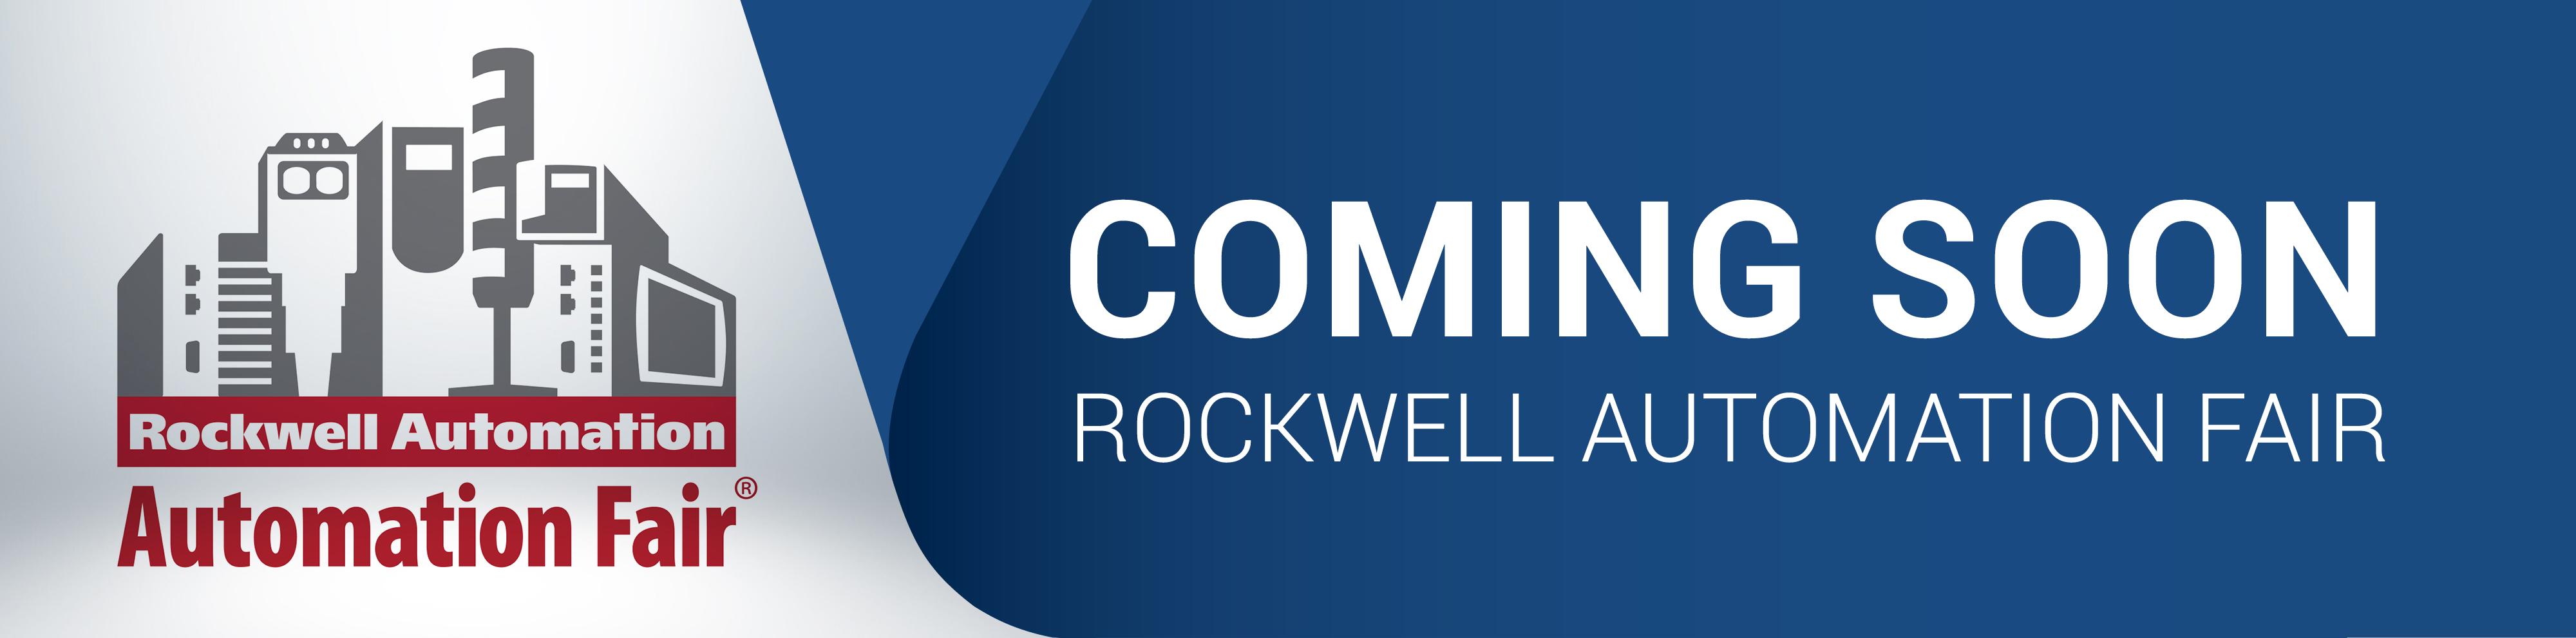 Rockwell自动化博览会